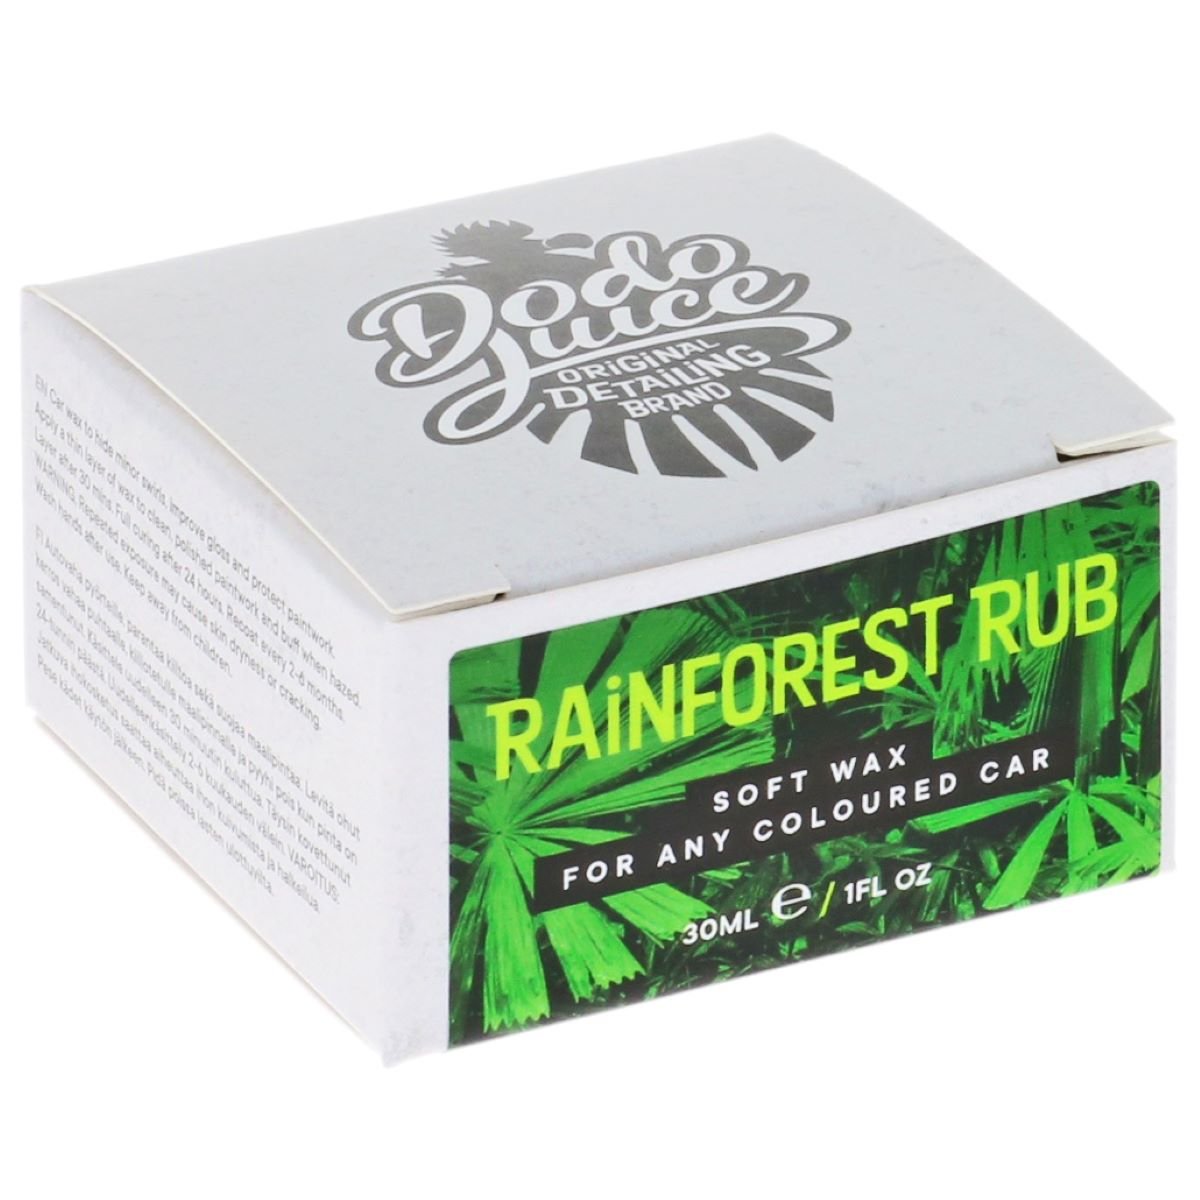 Rainforest Rub  soft wax for any coloured car - 30ml